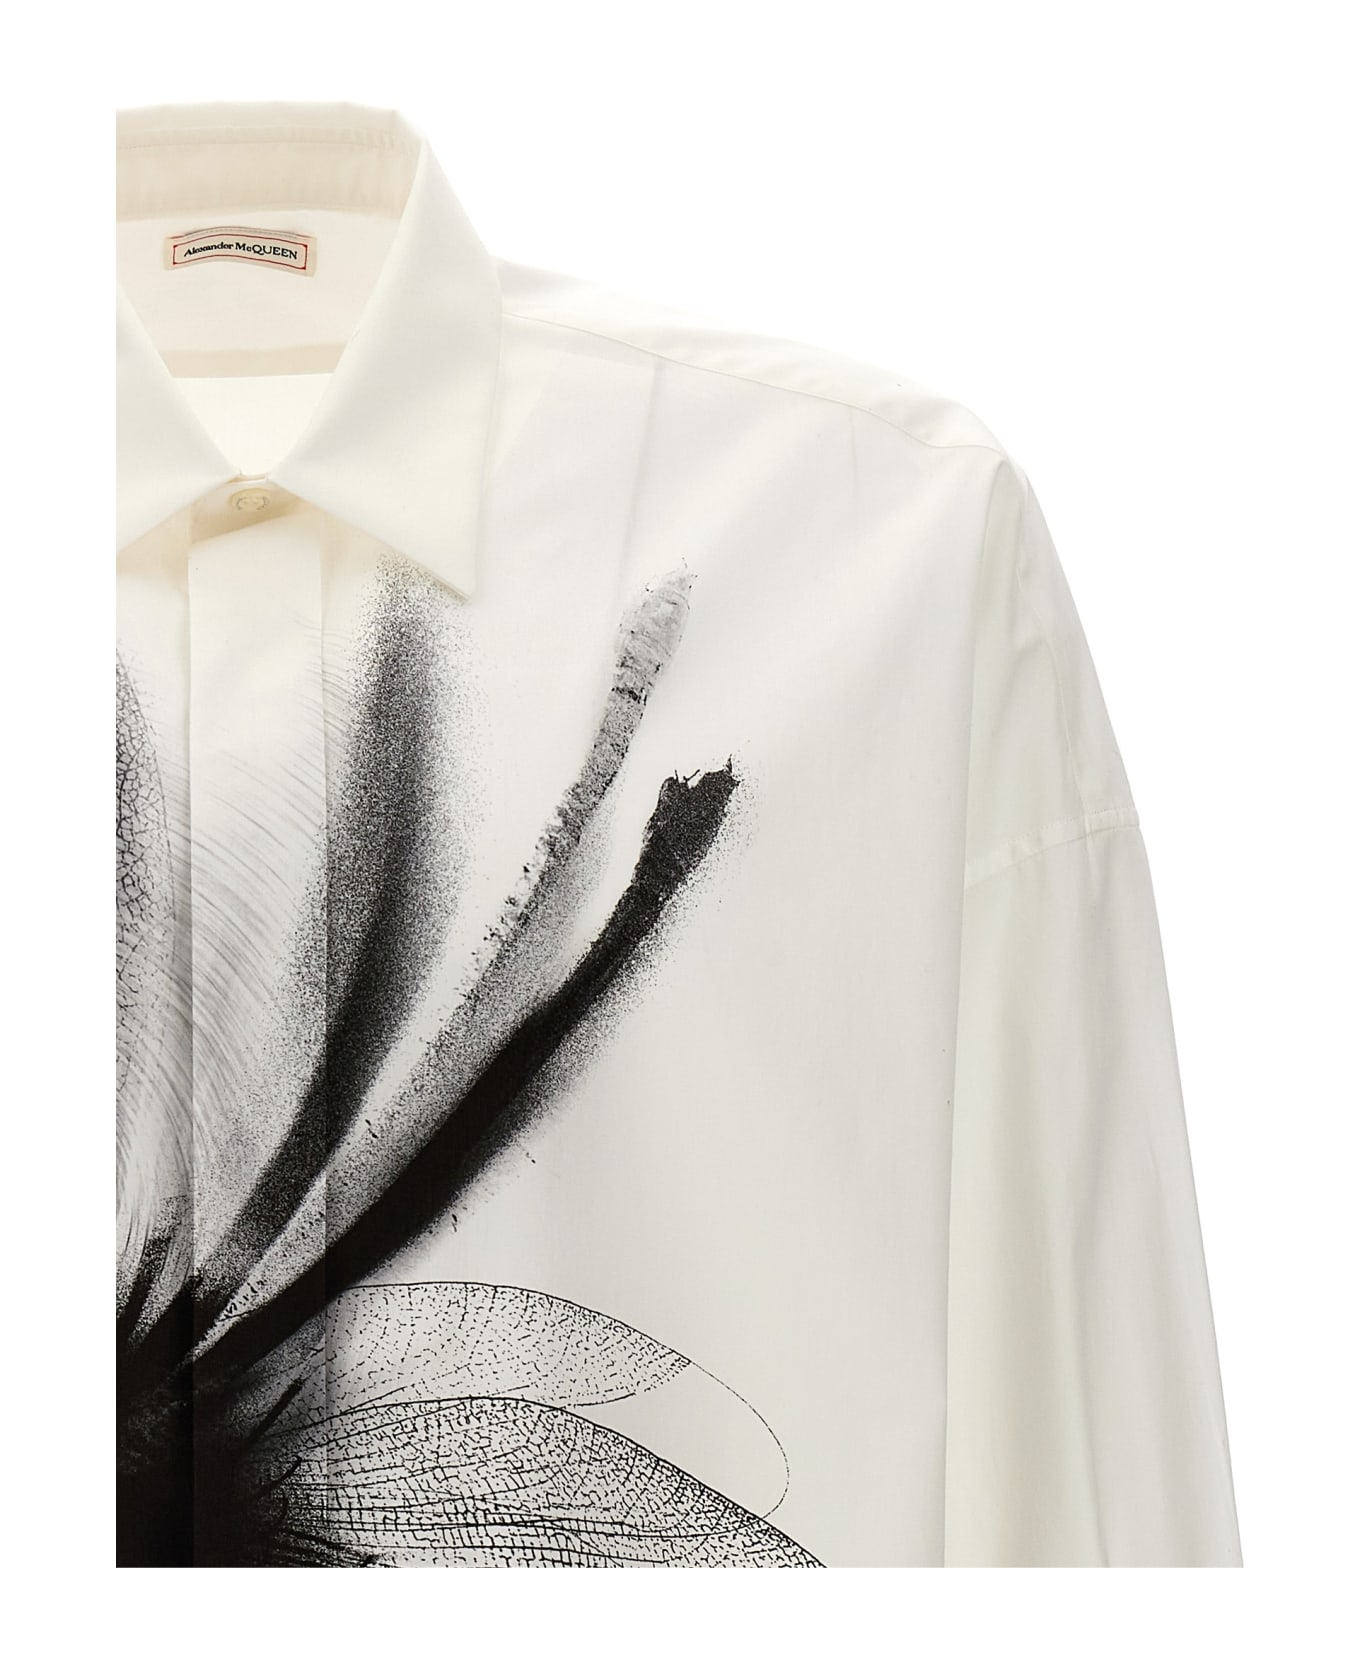 Alexander McQueen Printed Shirt - Bianco